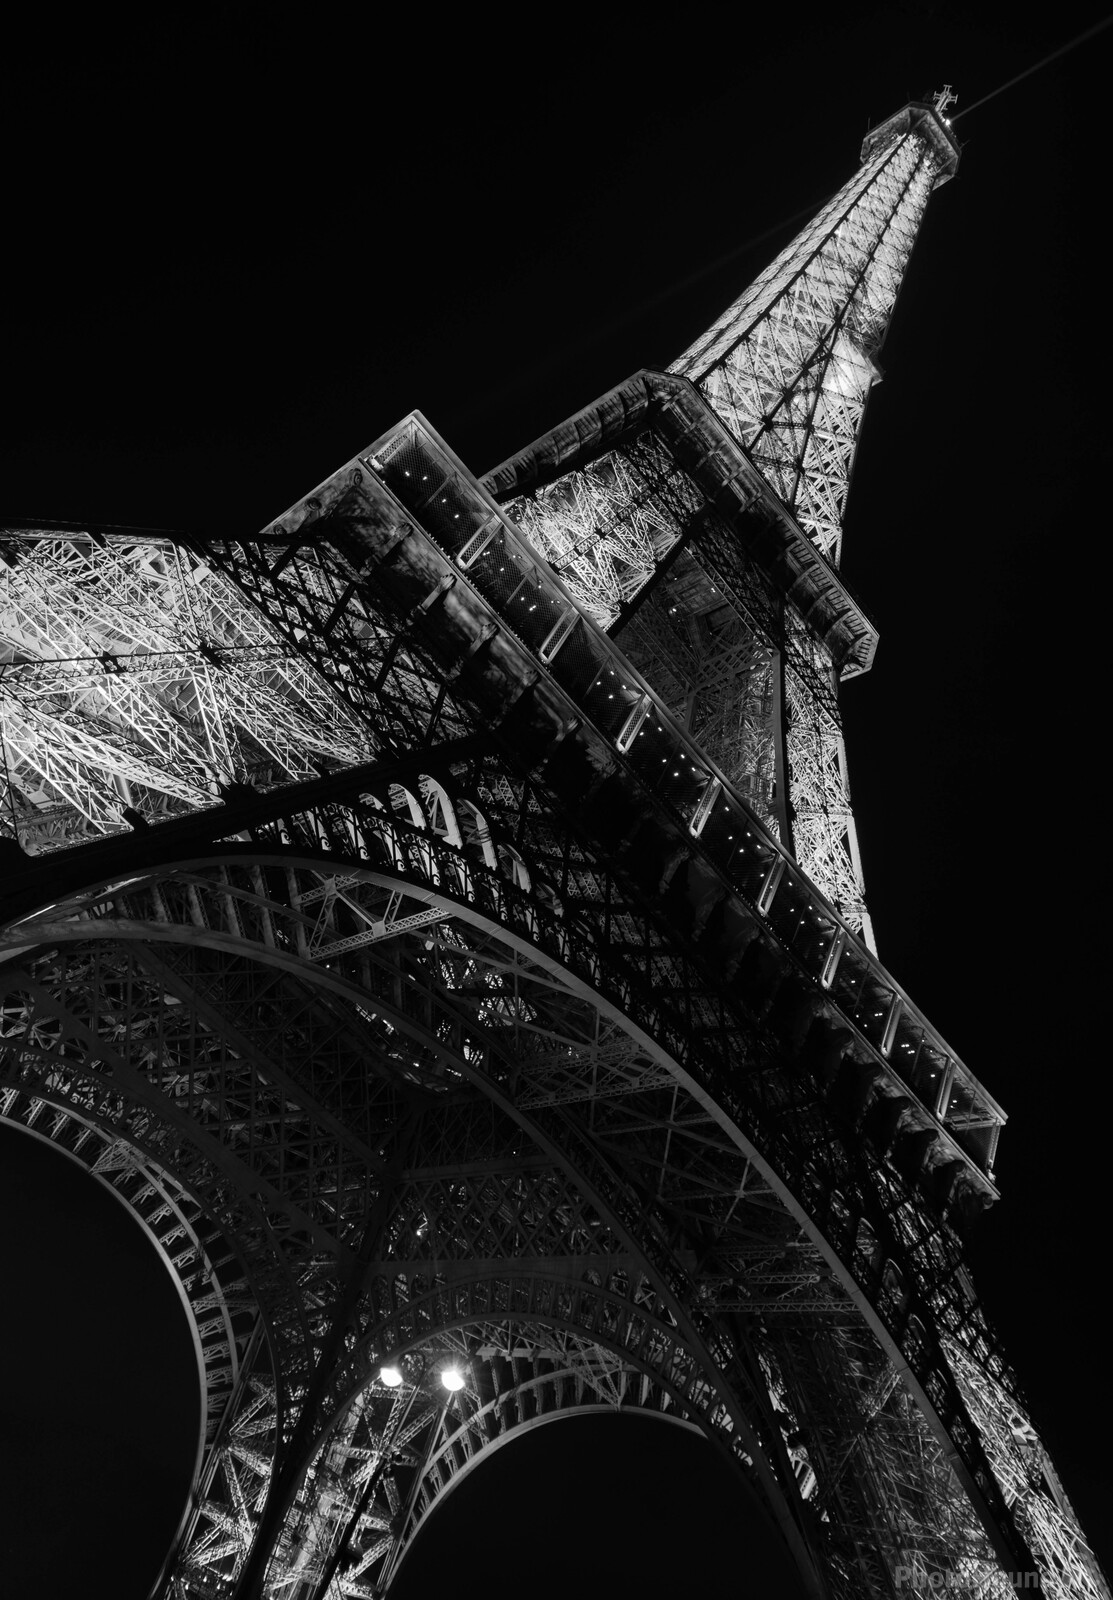 Image of Eiffel Tower, Paris by Florent MOMAL